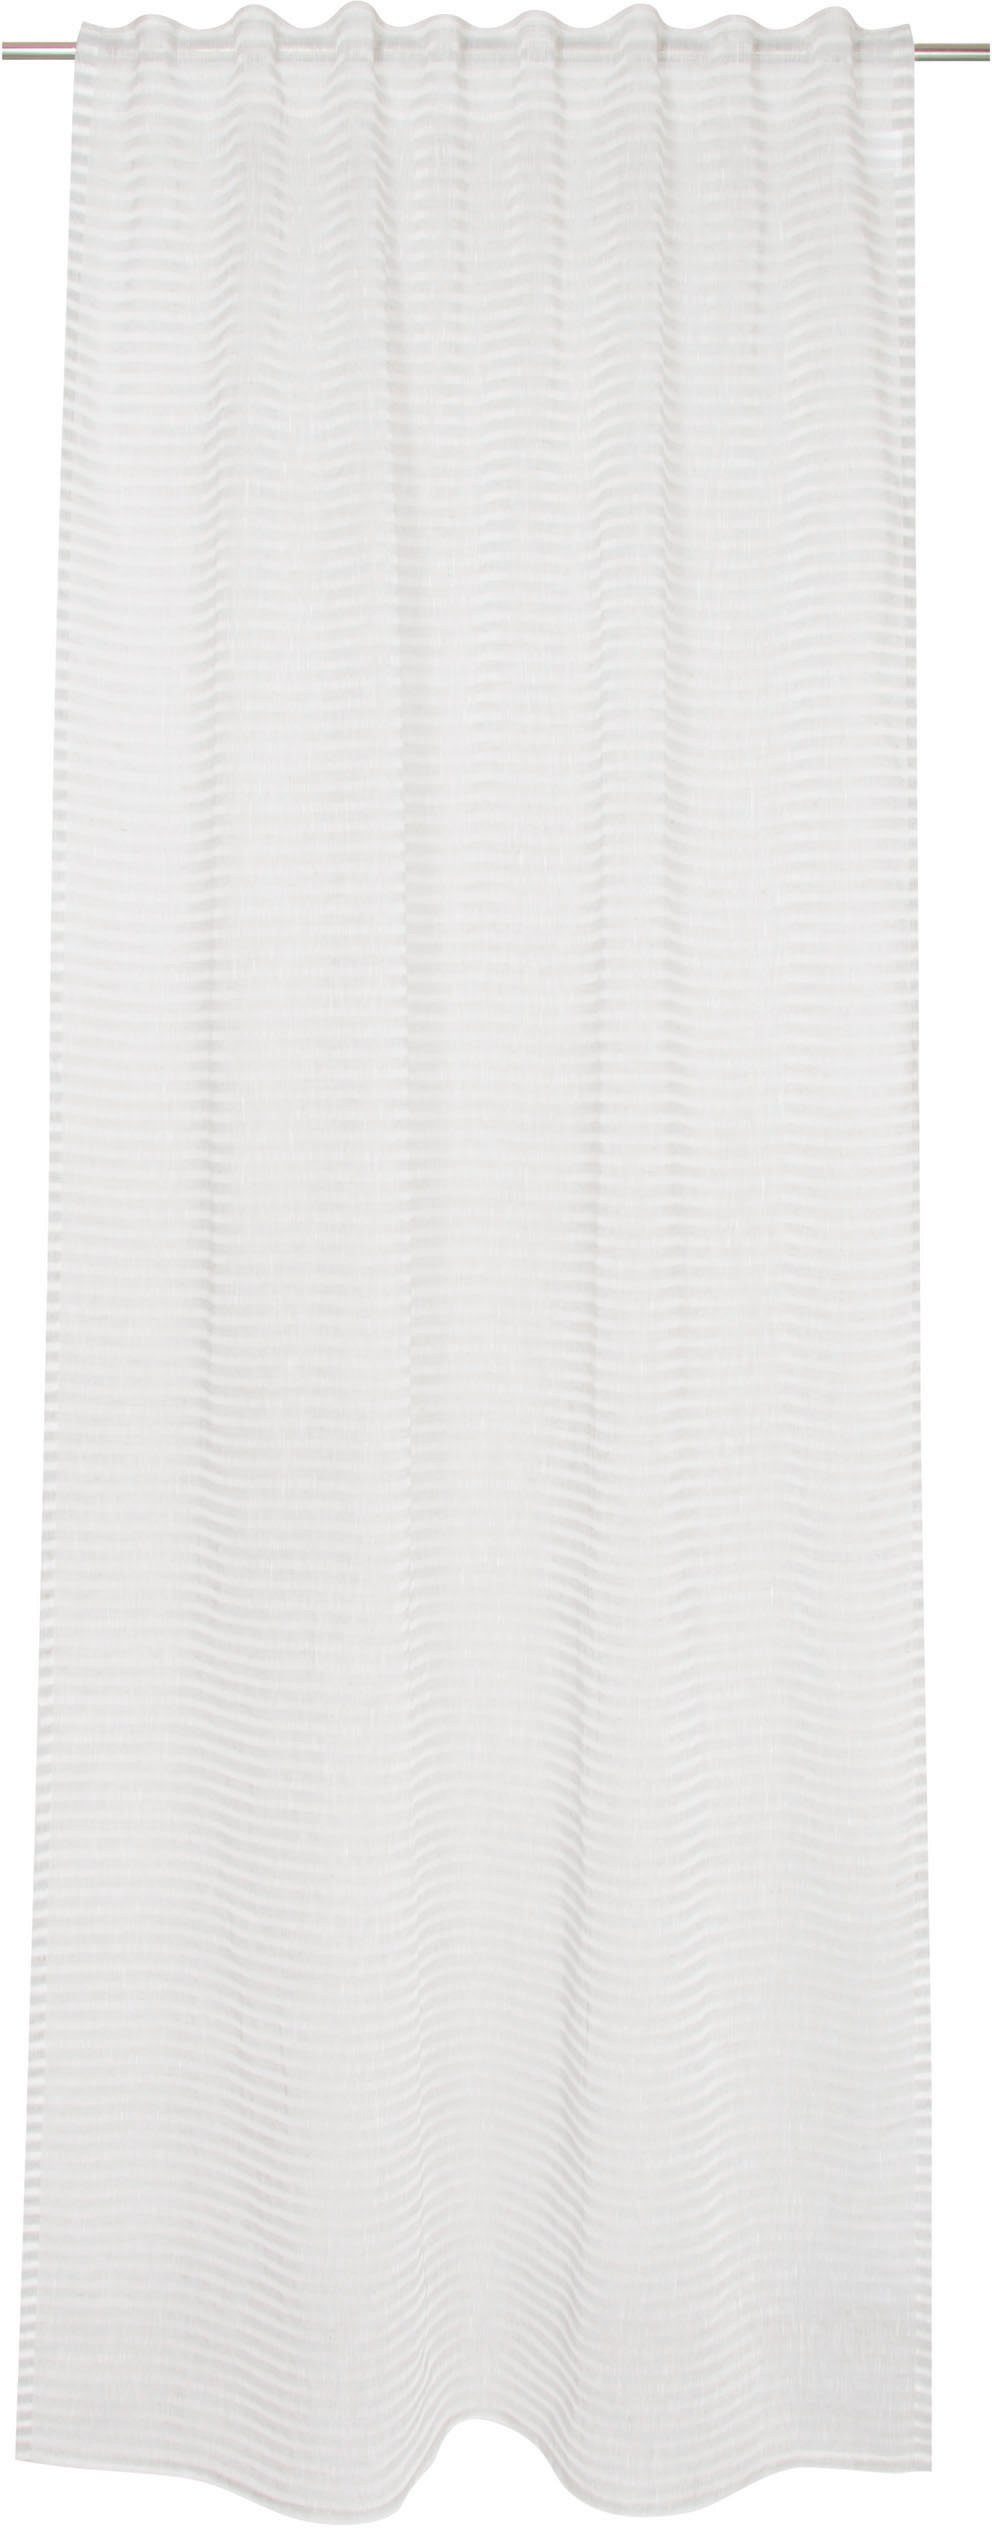 Vorhang Natural Stripe, Schlaufen verdeckte TAILOR grau transparent (1 transparent, St), HOME, TOM